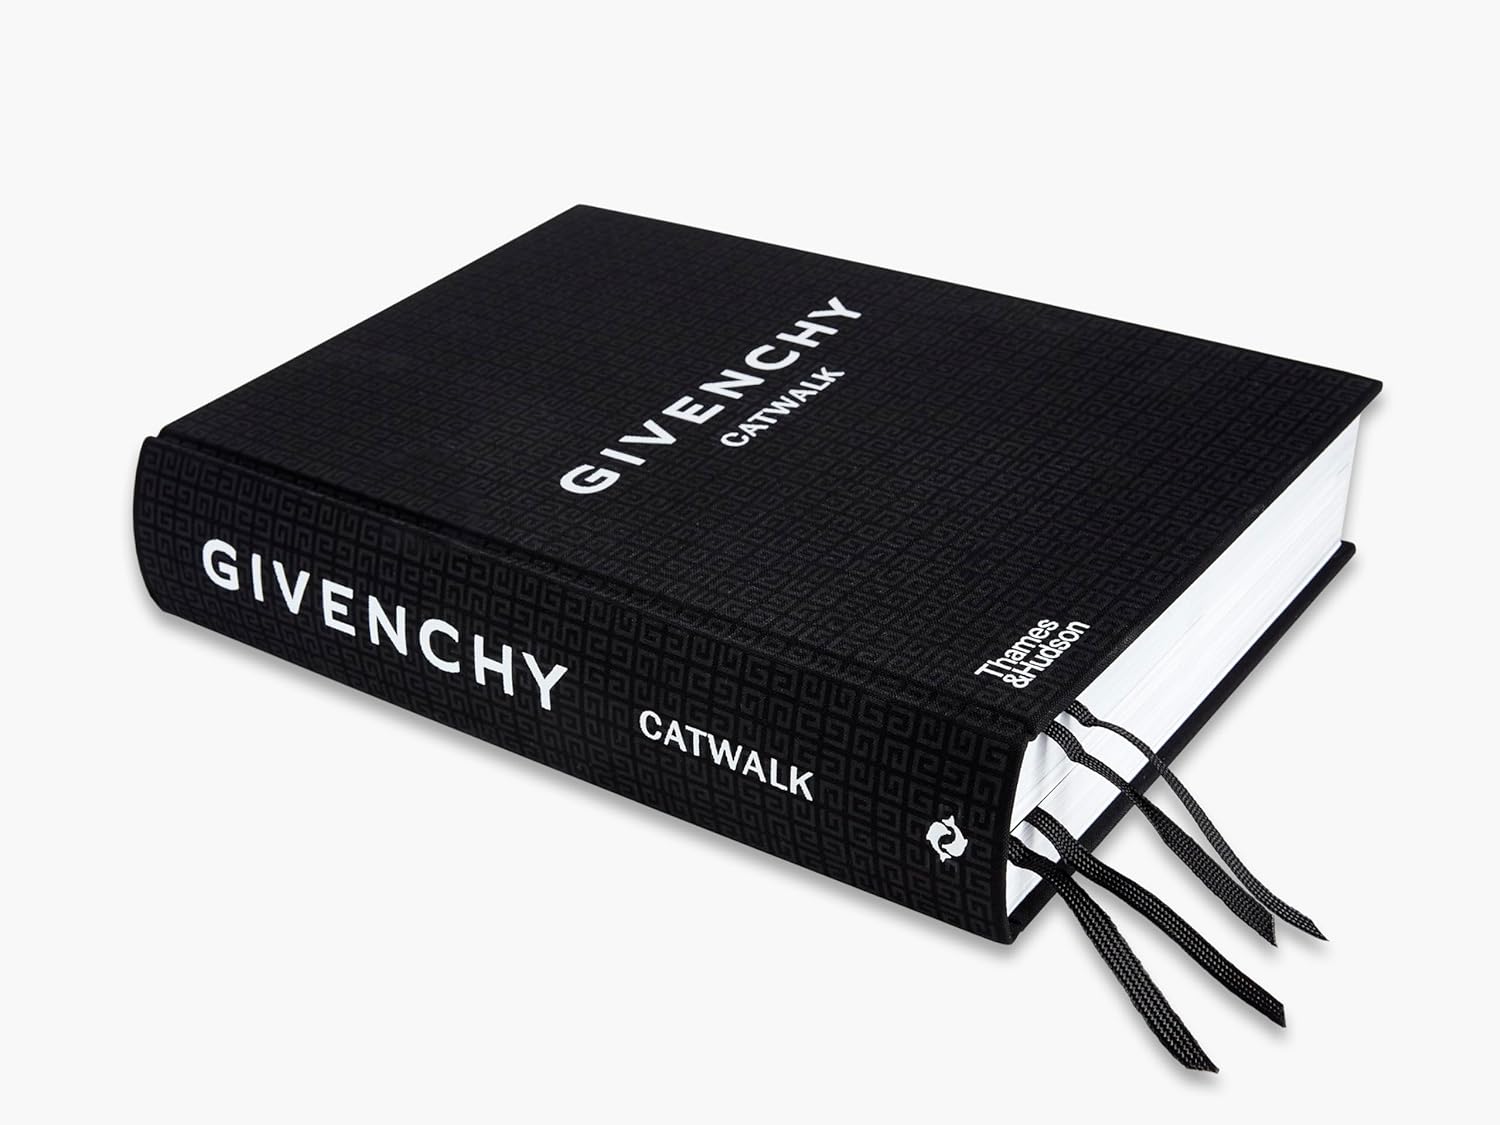 Givenchy Catwalk